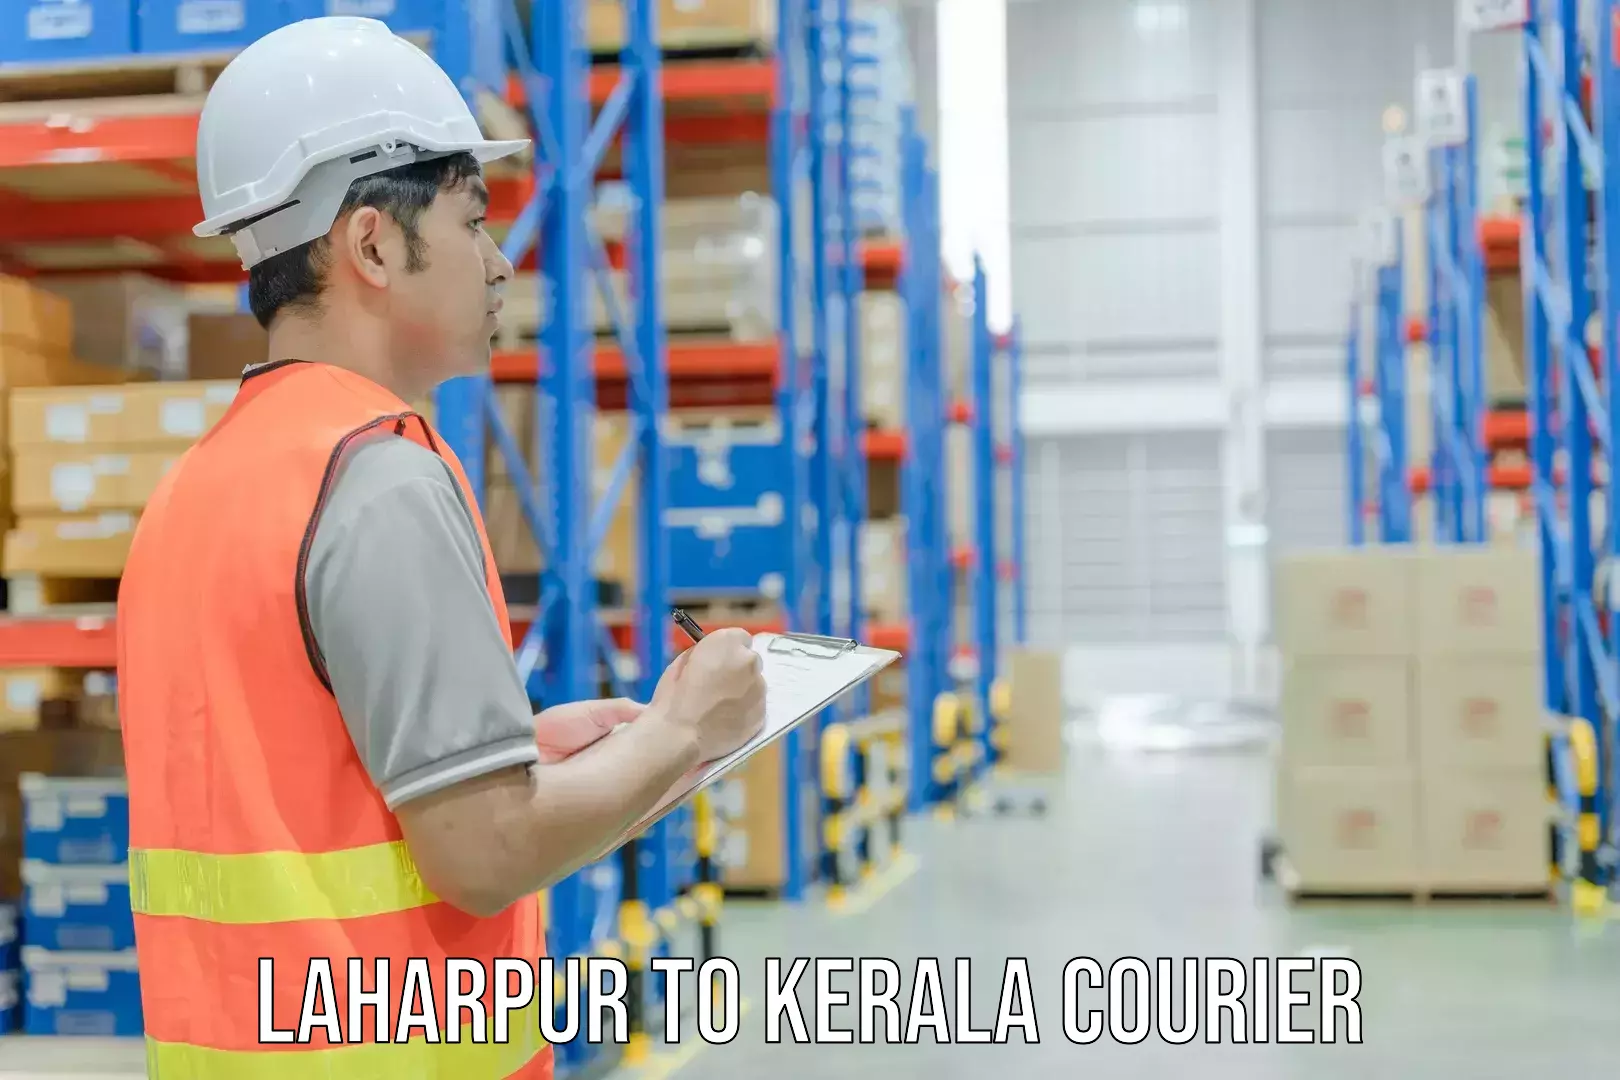 Digital courier platforms Laharpur to Kerala